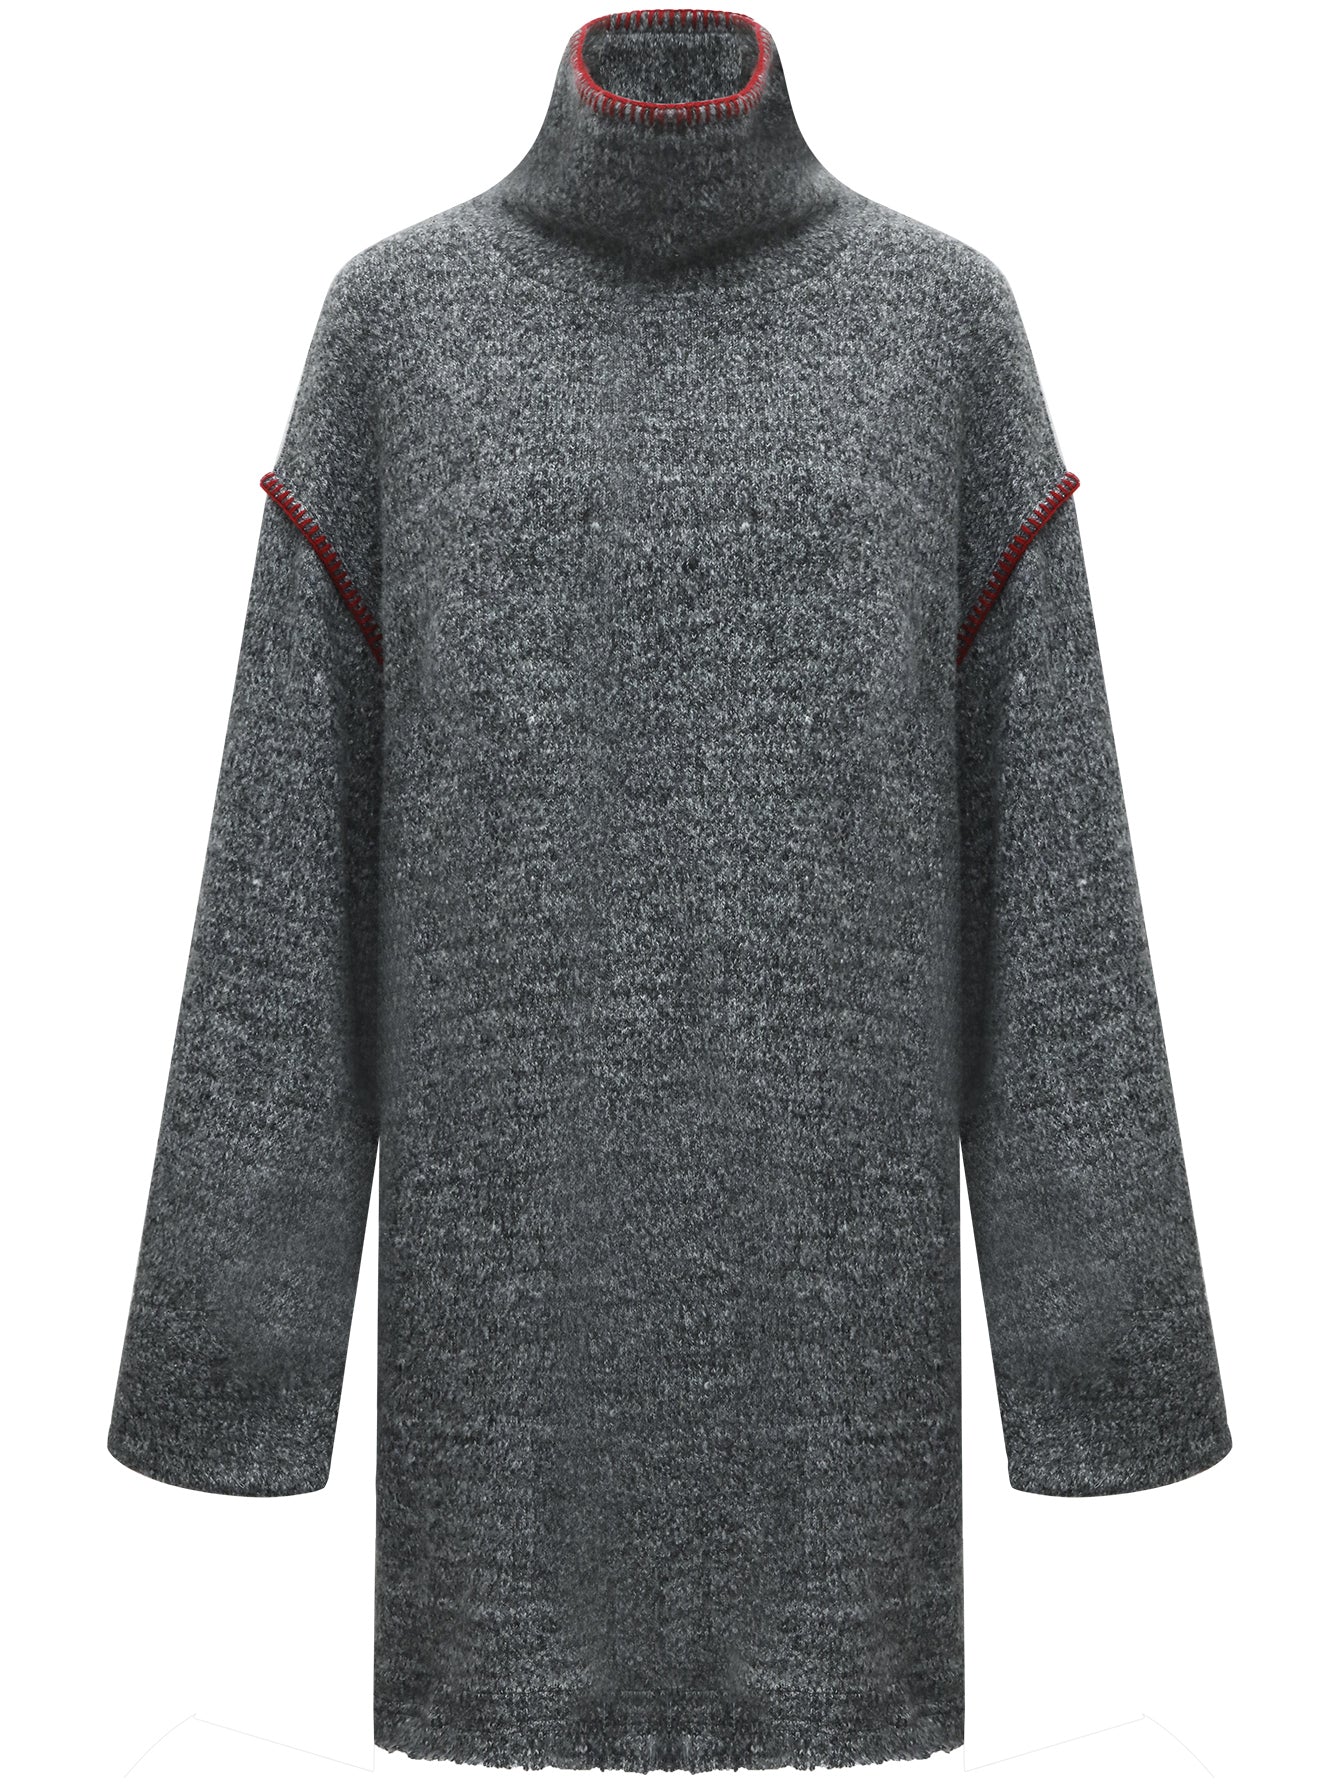 elegant-high-neck-grey-knitted-dress_all_grey_4.jpg